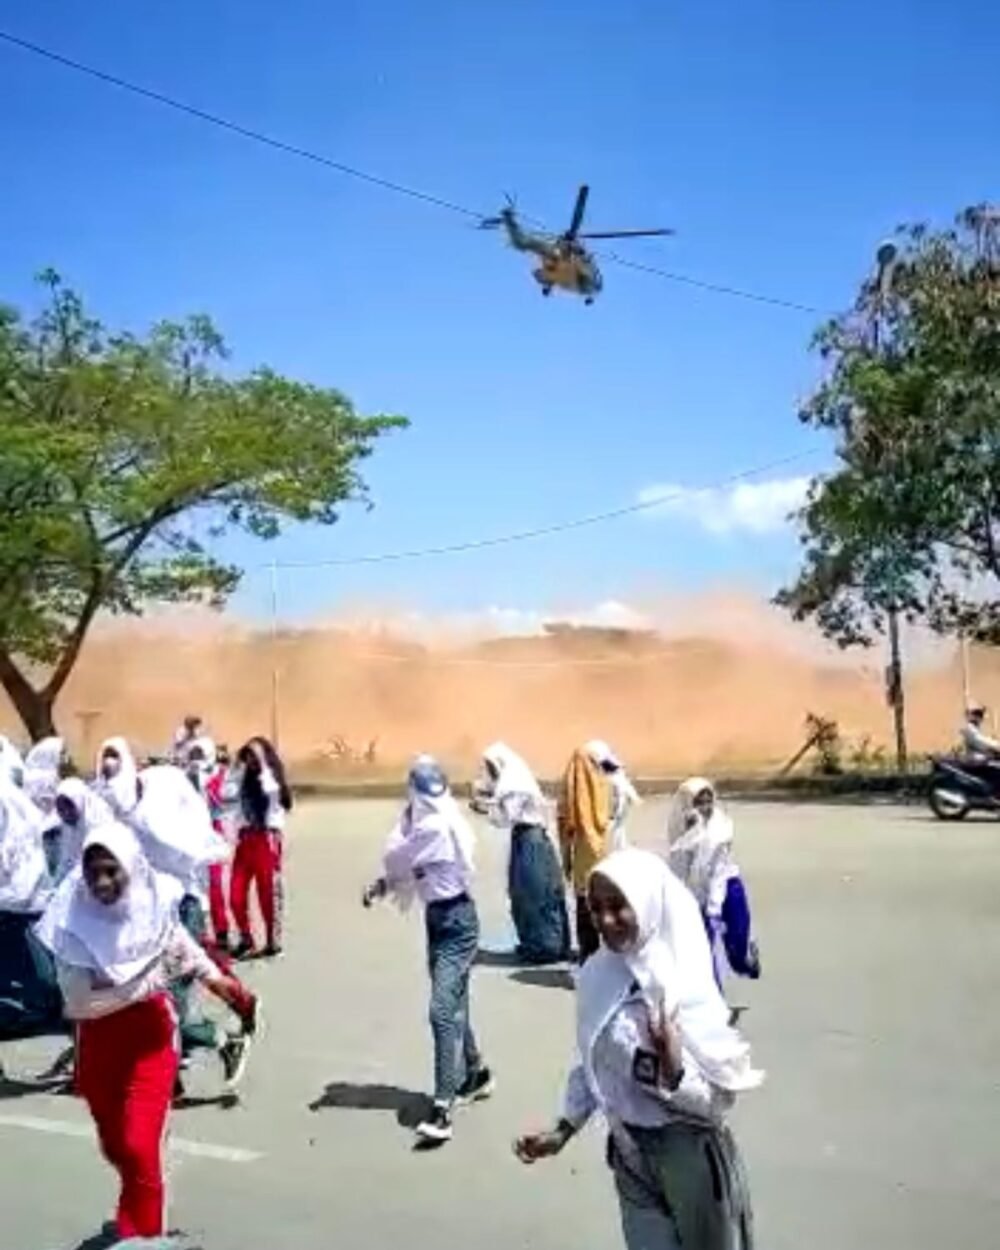 Helikopter yang Melintas di Stadion Betoambari Bikin Berdebu, Pelajar Terhambur Berlarian